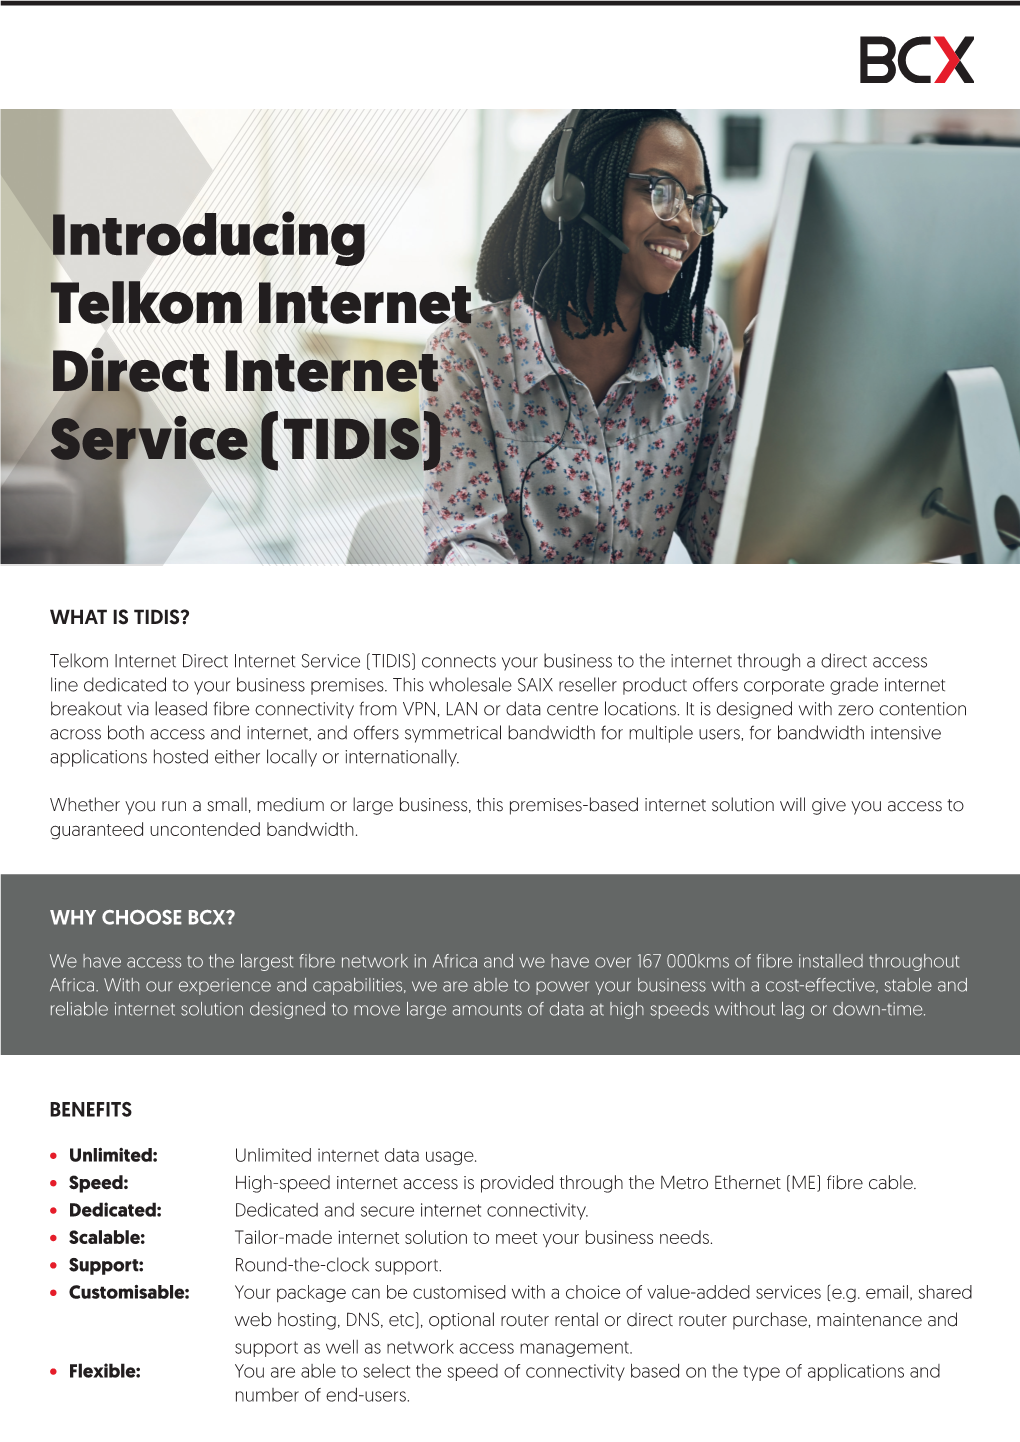 Introducing Telkom Internet Direct Internet Service (TIDIS)